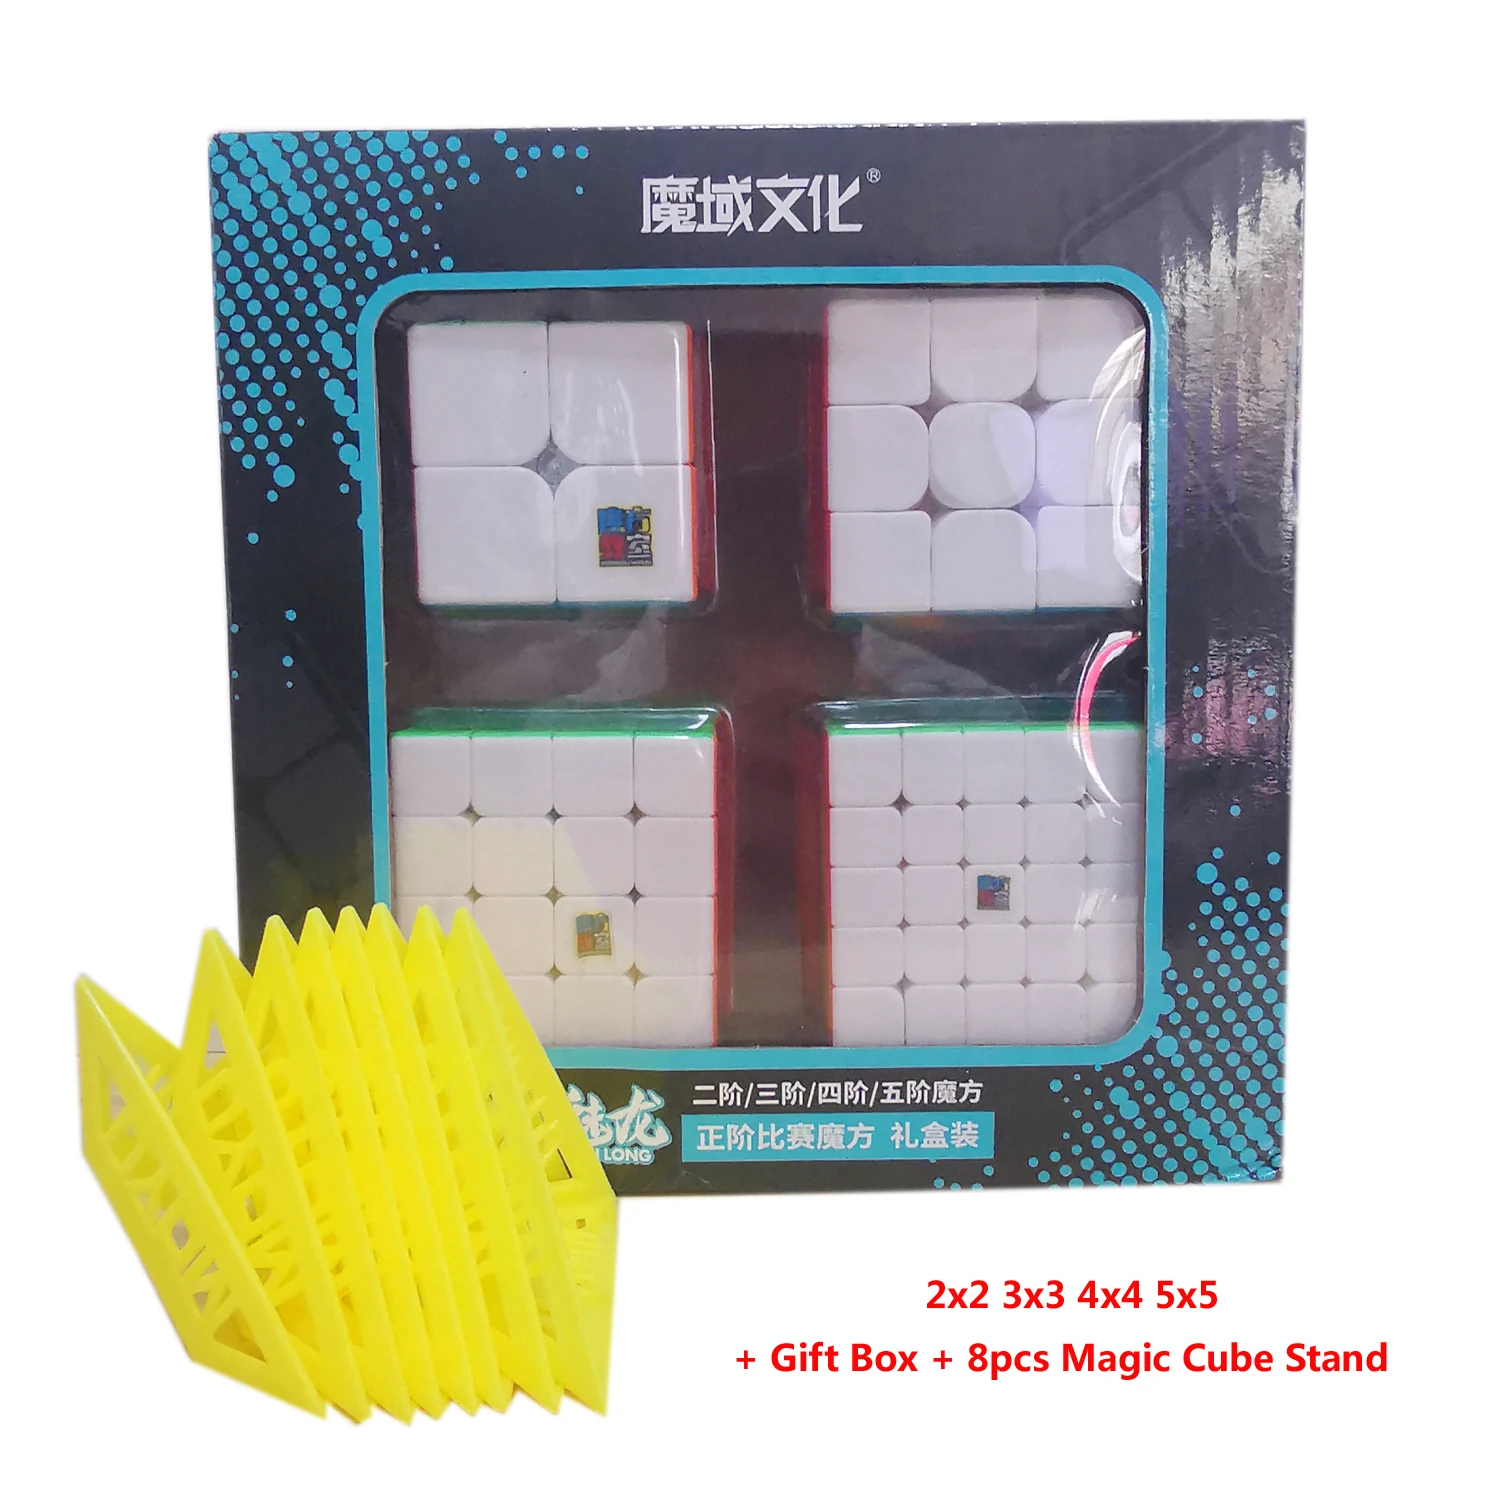 MoYu Meilong ของขวัญกล่อง2X2 3X3 4X4 5X5ชุดลูกบาศก์ความเร็ว2X2X2 3X3X3 4X4X4 5X5X5 Professional magic Cube เกมการศึกษาสำหรับเด็ก